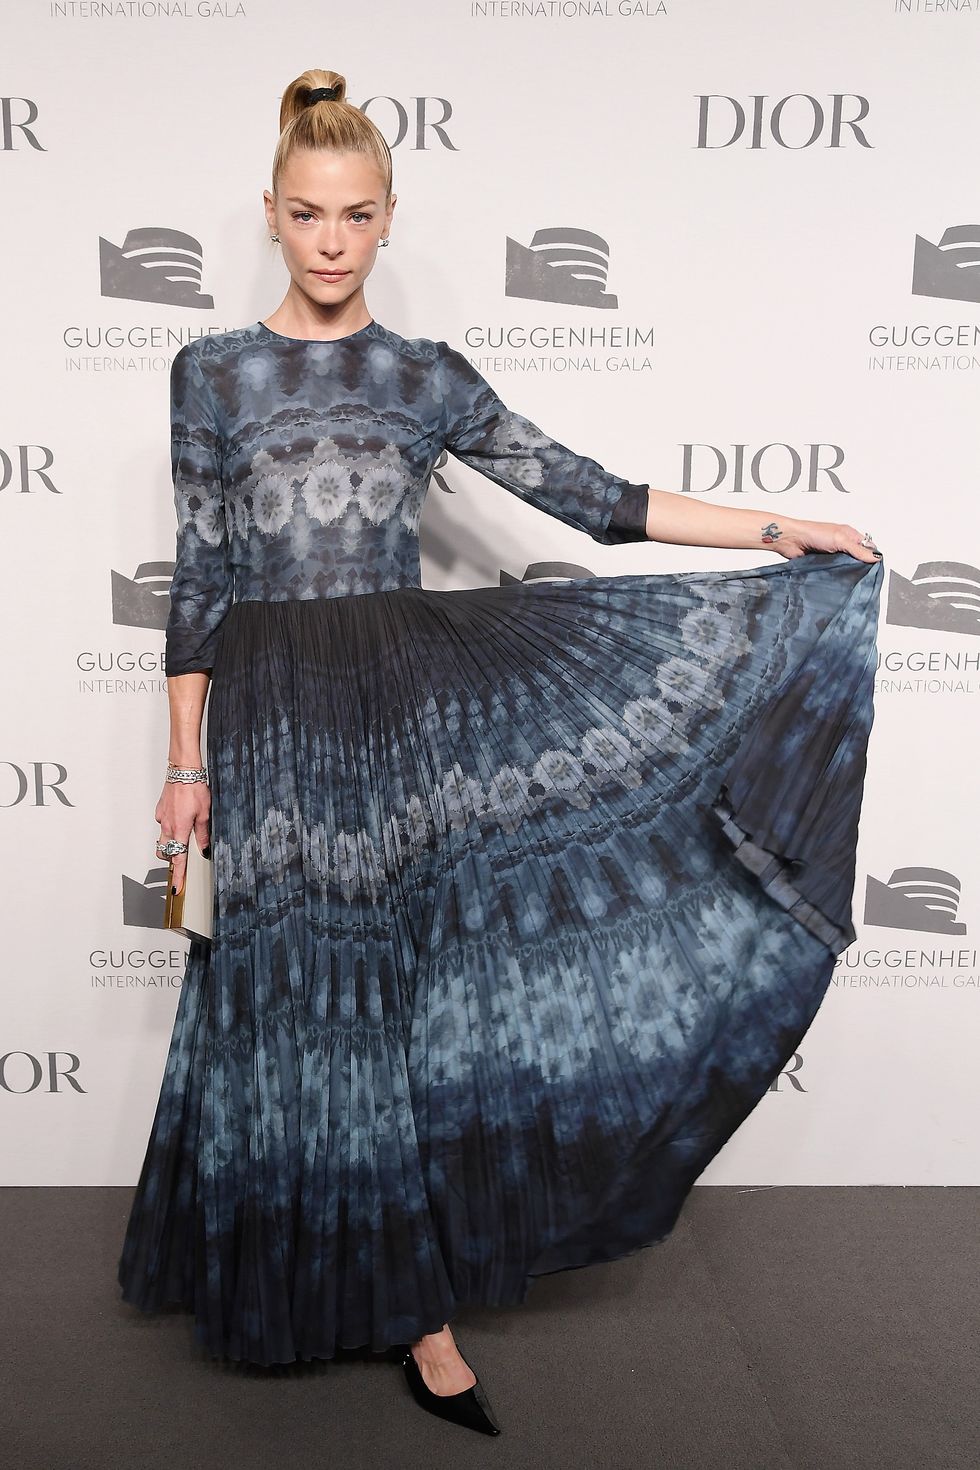 Guggenheim International Gala Dinner, Made Possible By Dior